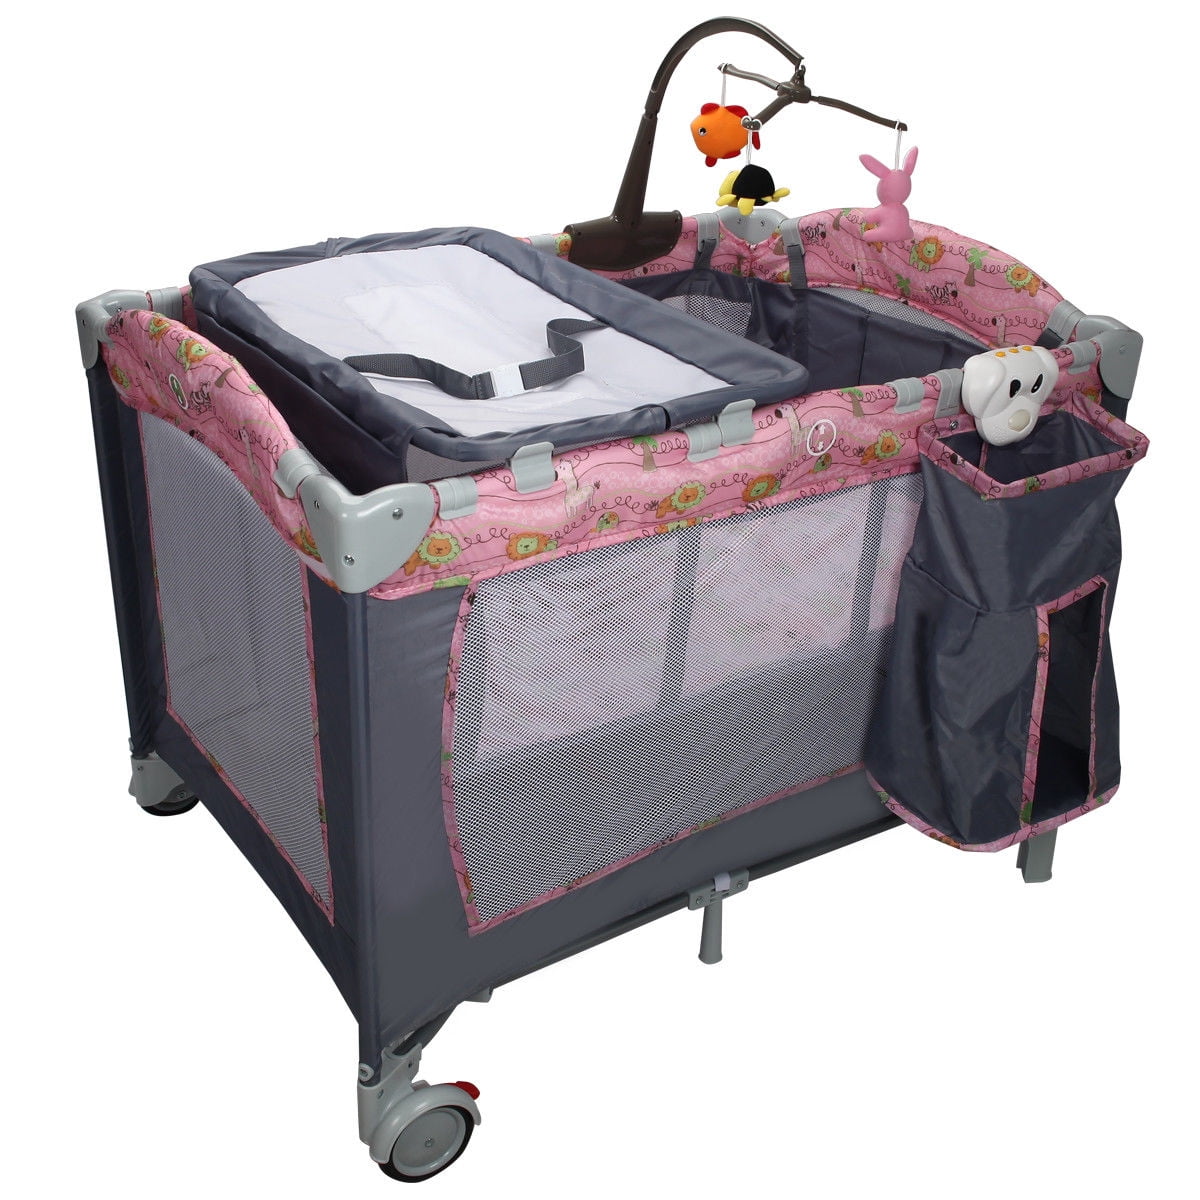 Costway Foldable Baby Crib Playpen Playard Pack Travel ...